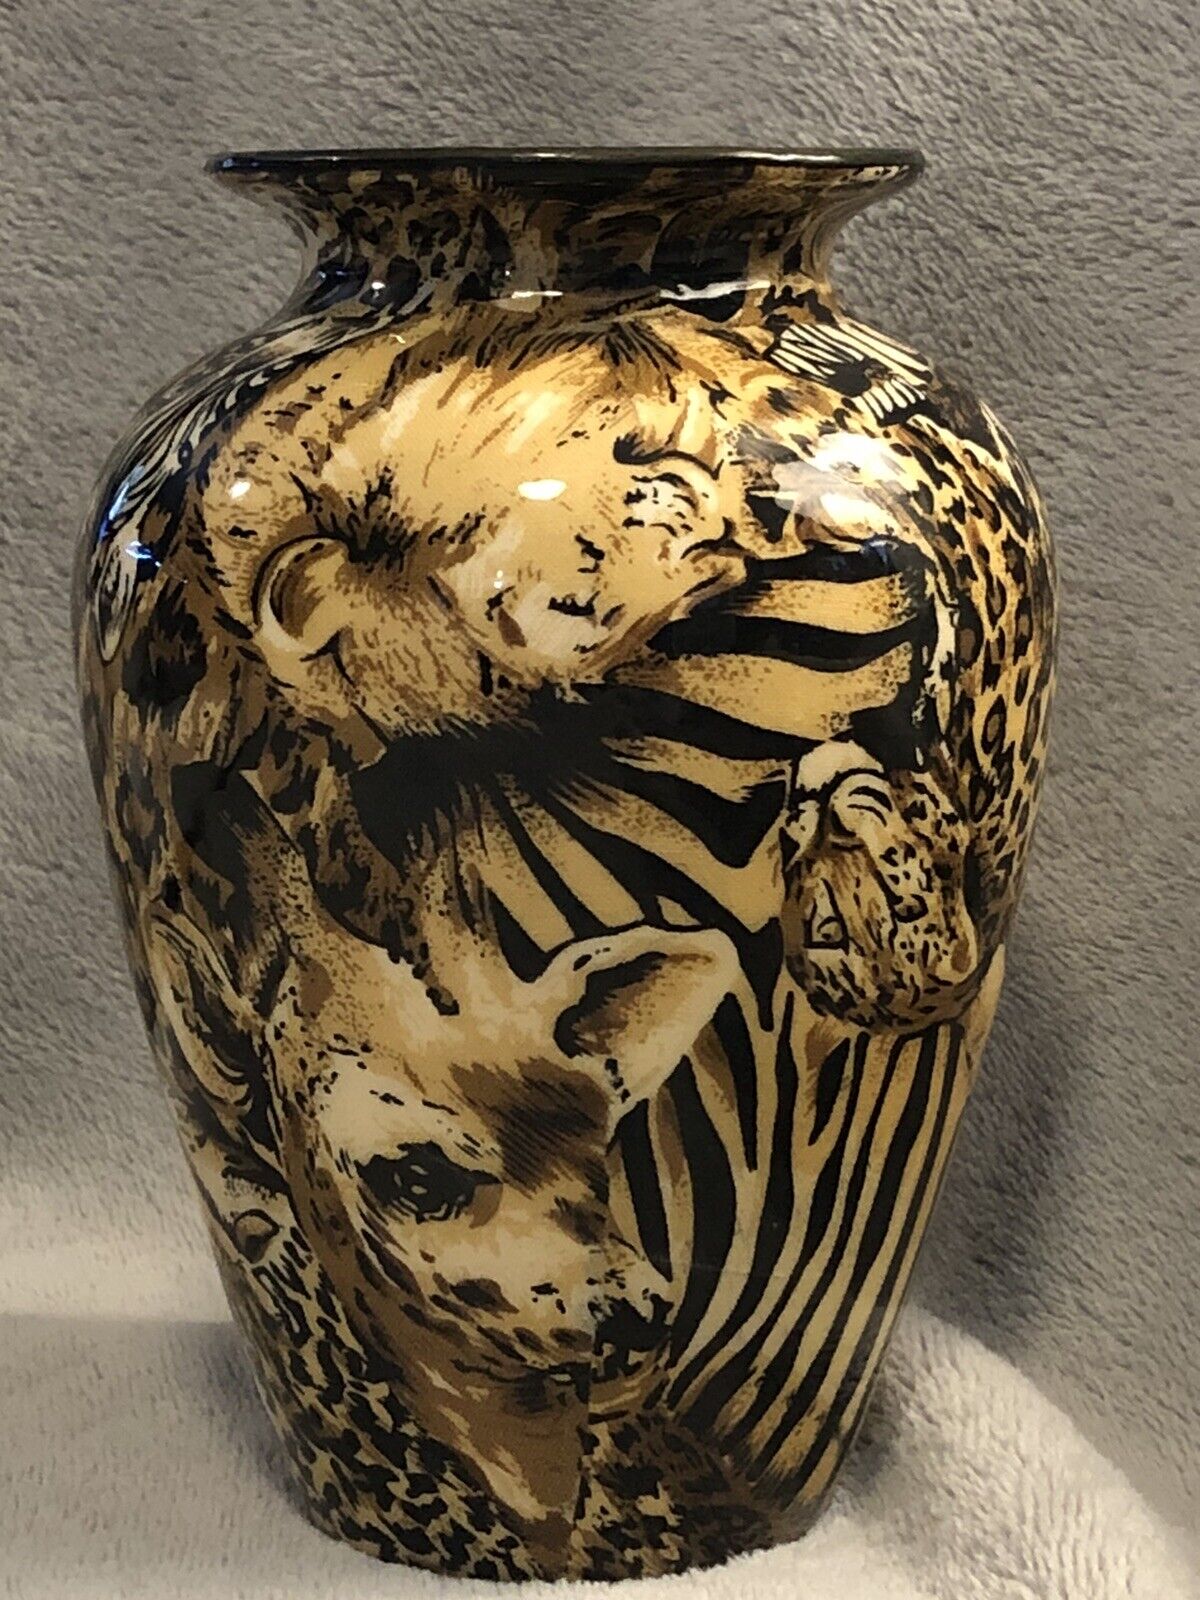 La Vie Handcrafted African Animal Safari Decoupage Porcelain Vase 6 1/2 inches